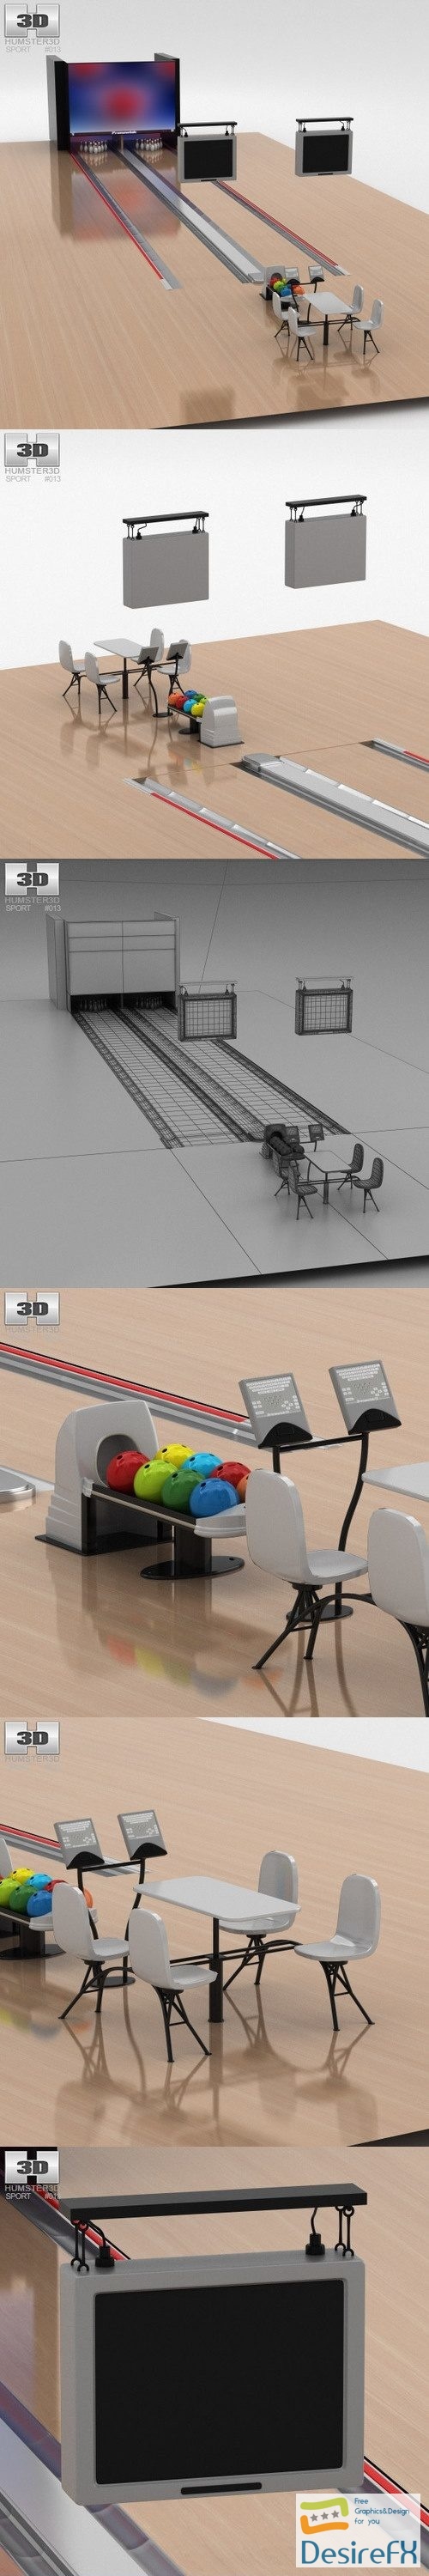 Bowling set 3D Model